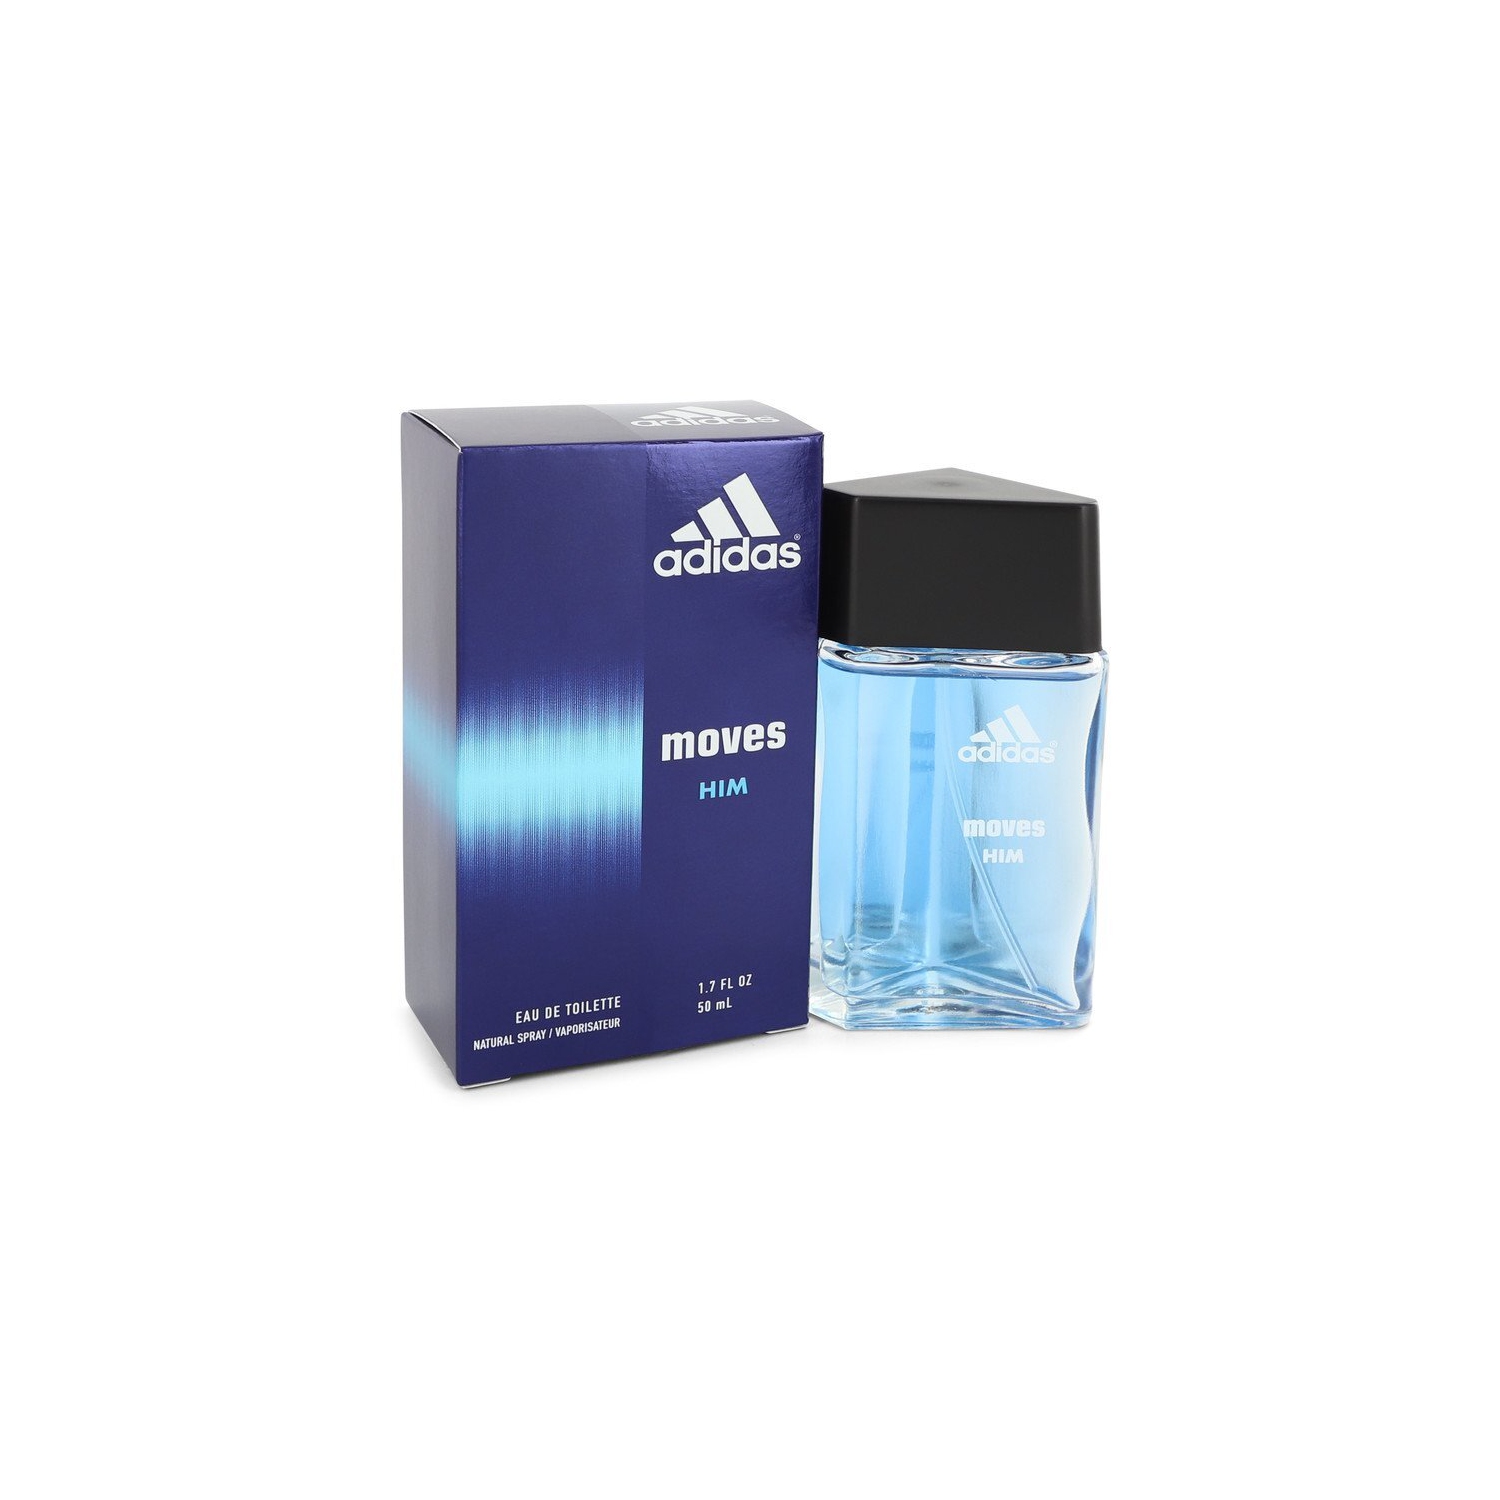 Adidas Moves by Adidas Eau De Toilette Spray (Men) 1.7 oz